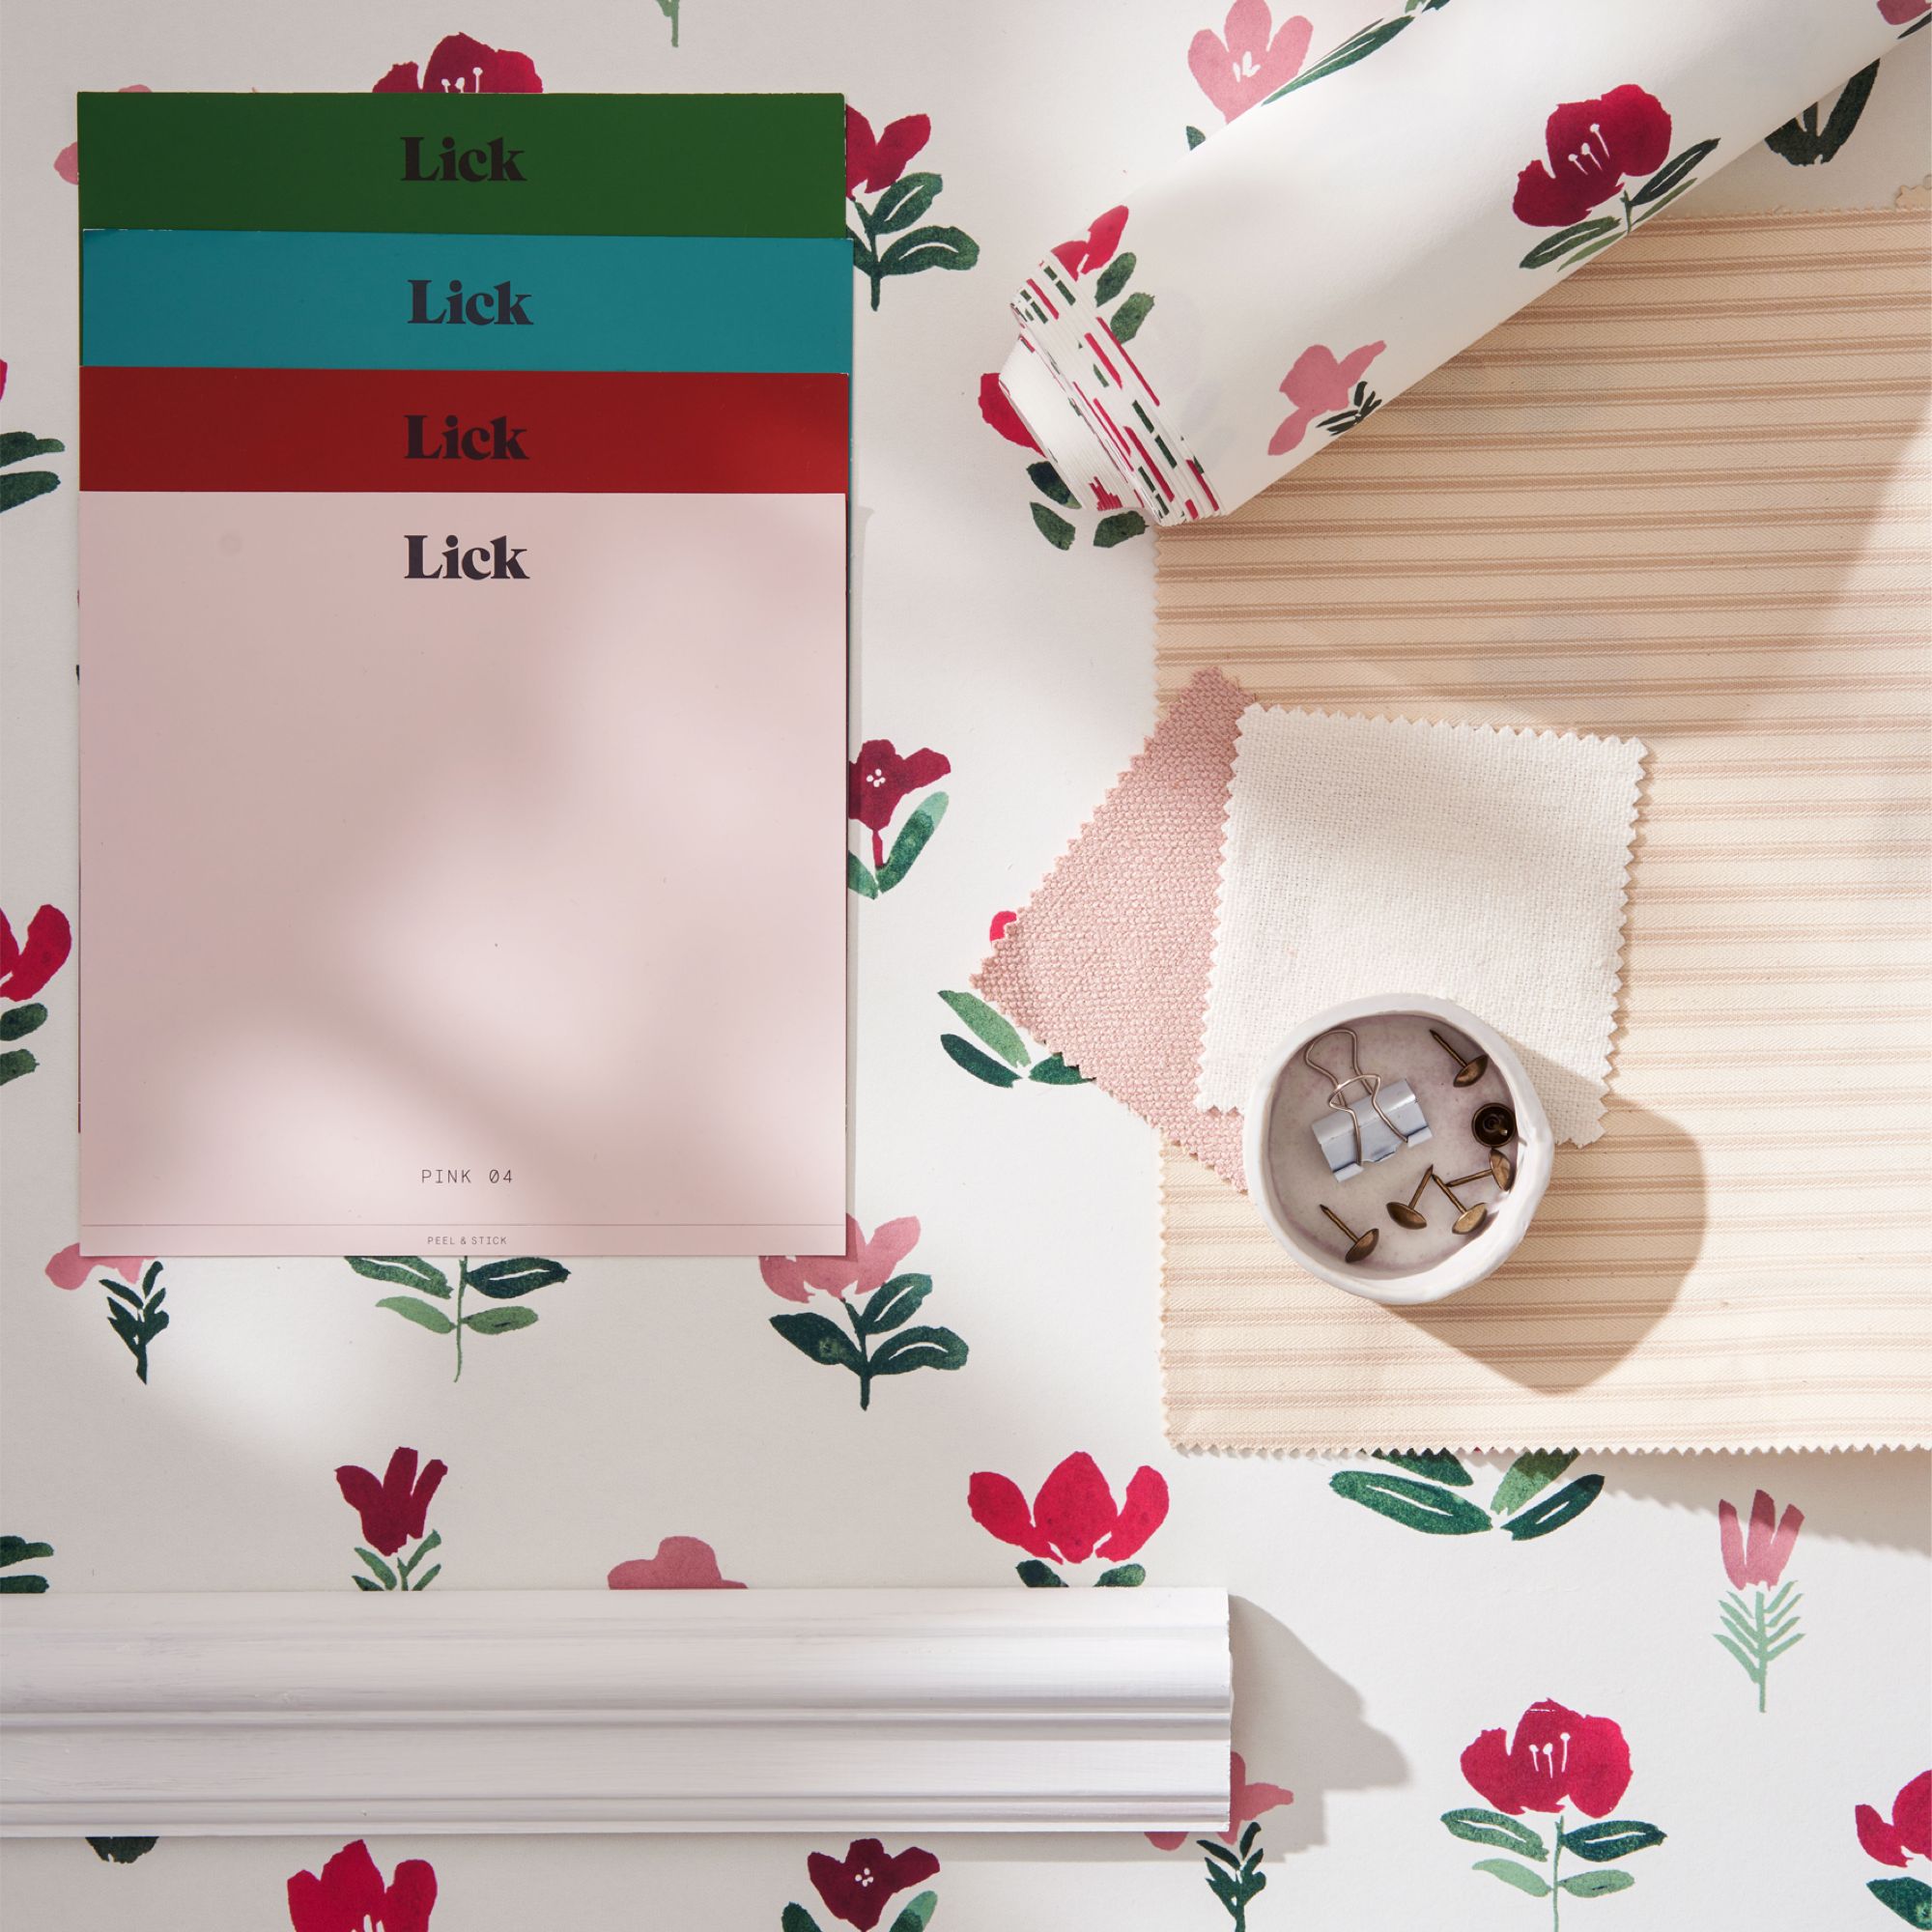 Lick Pink & White Petals 01 Textured Wallpaper